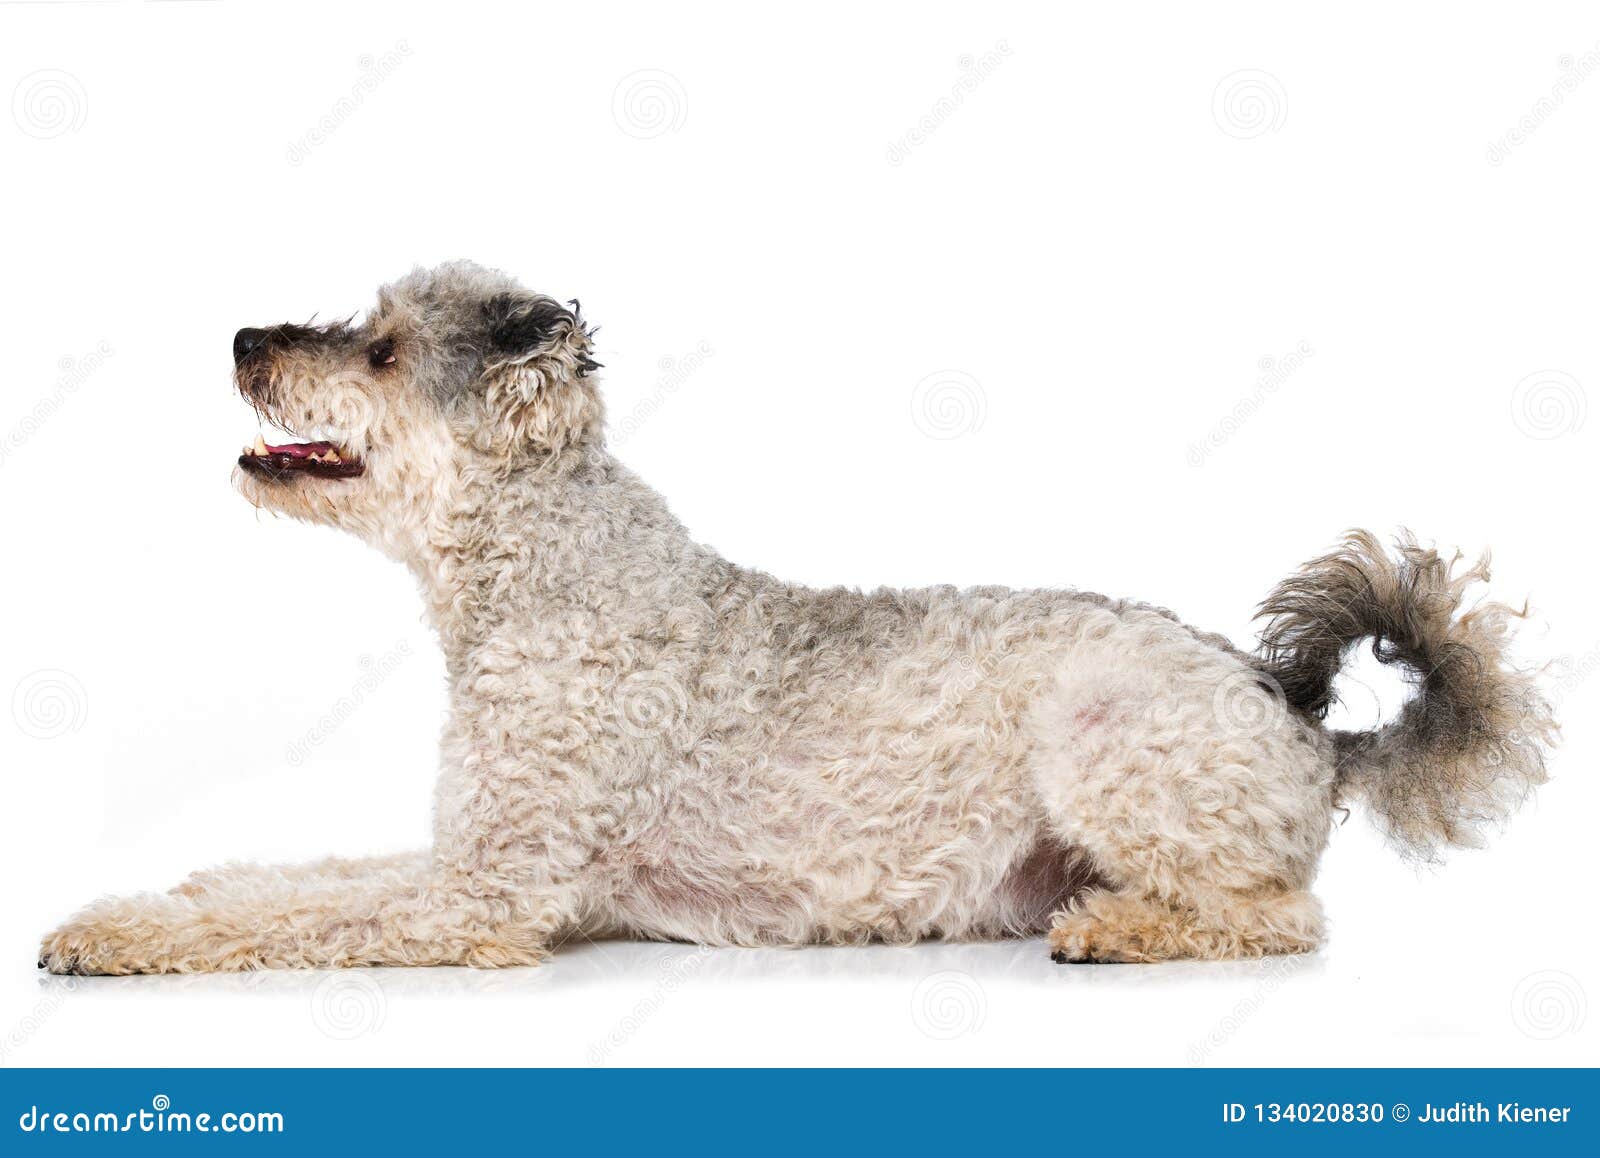 Pumi Dog On White Background Stock Photo Image Of Canine Funny 134020830